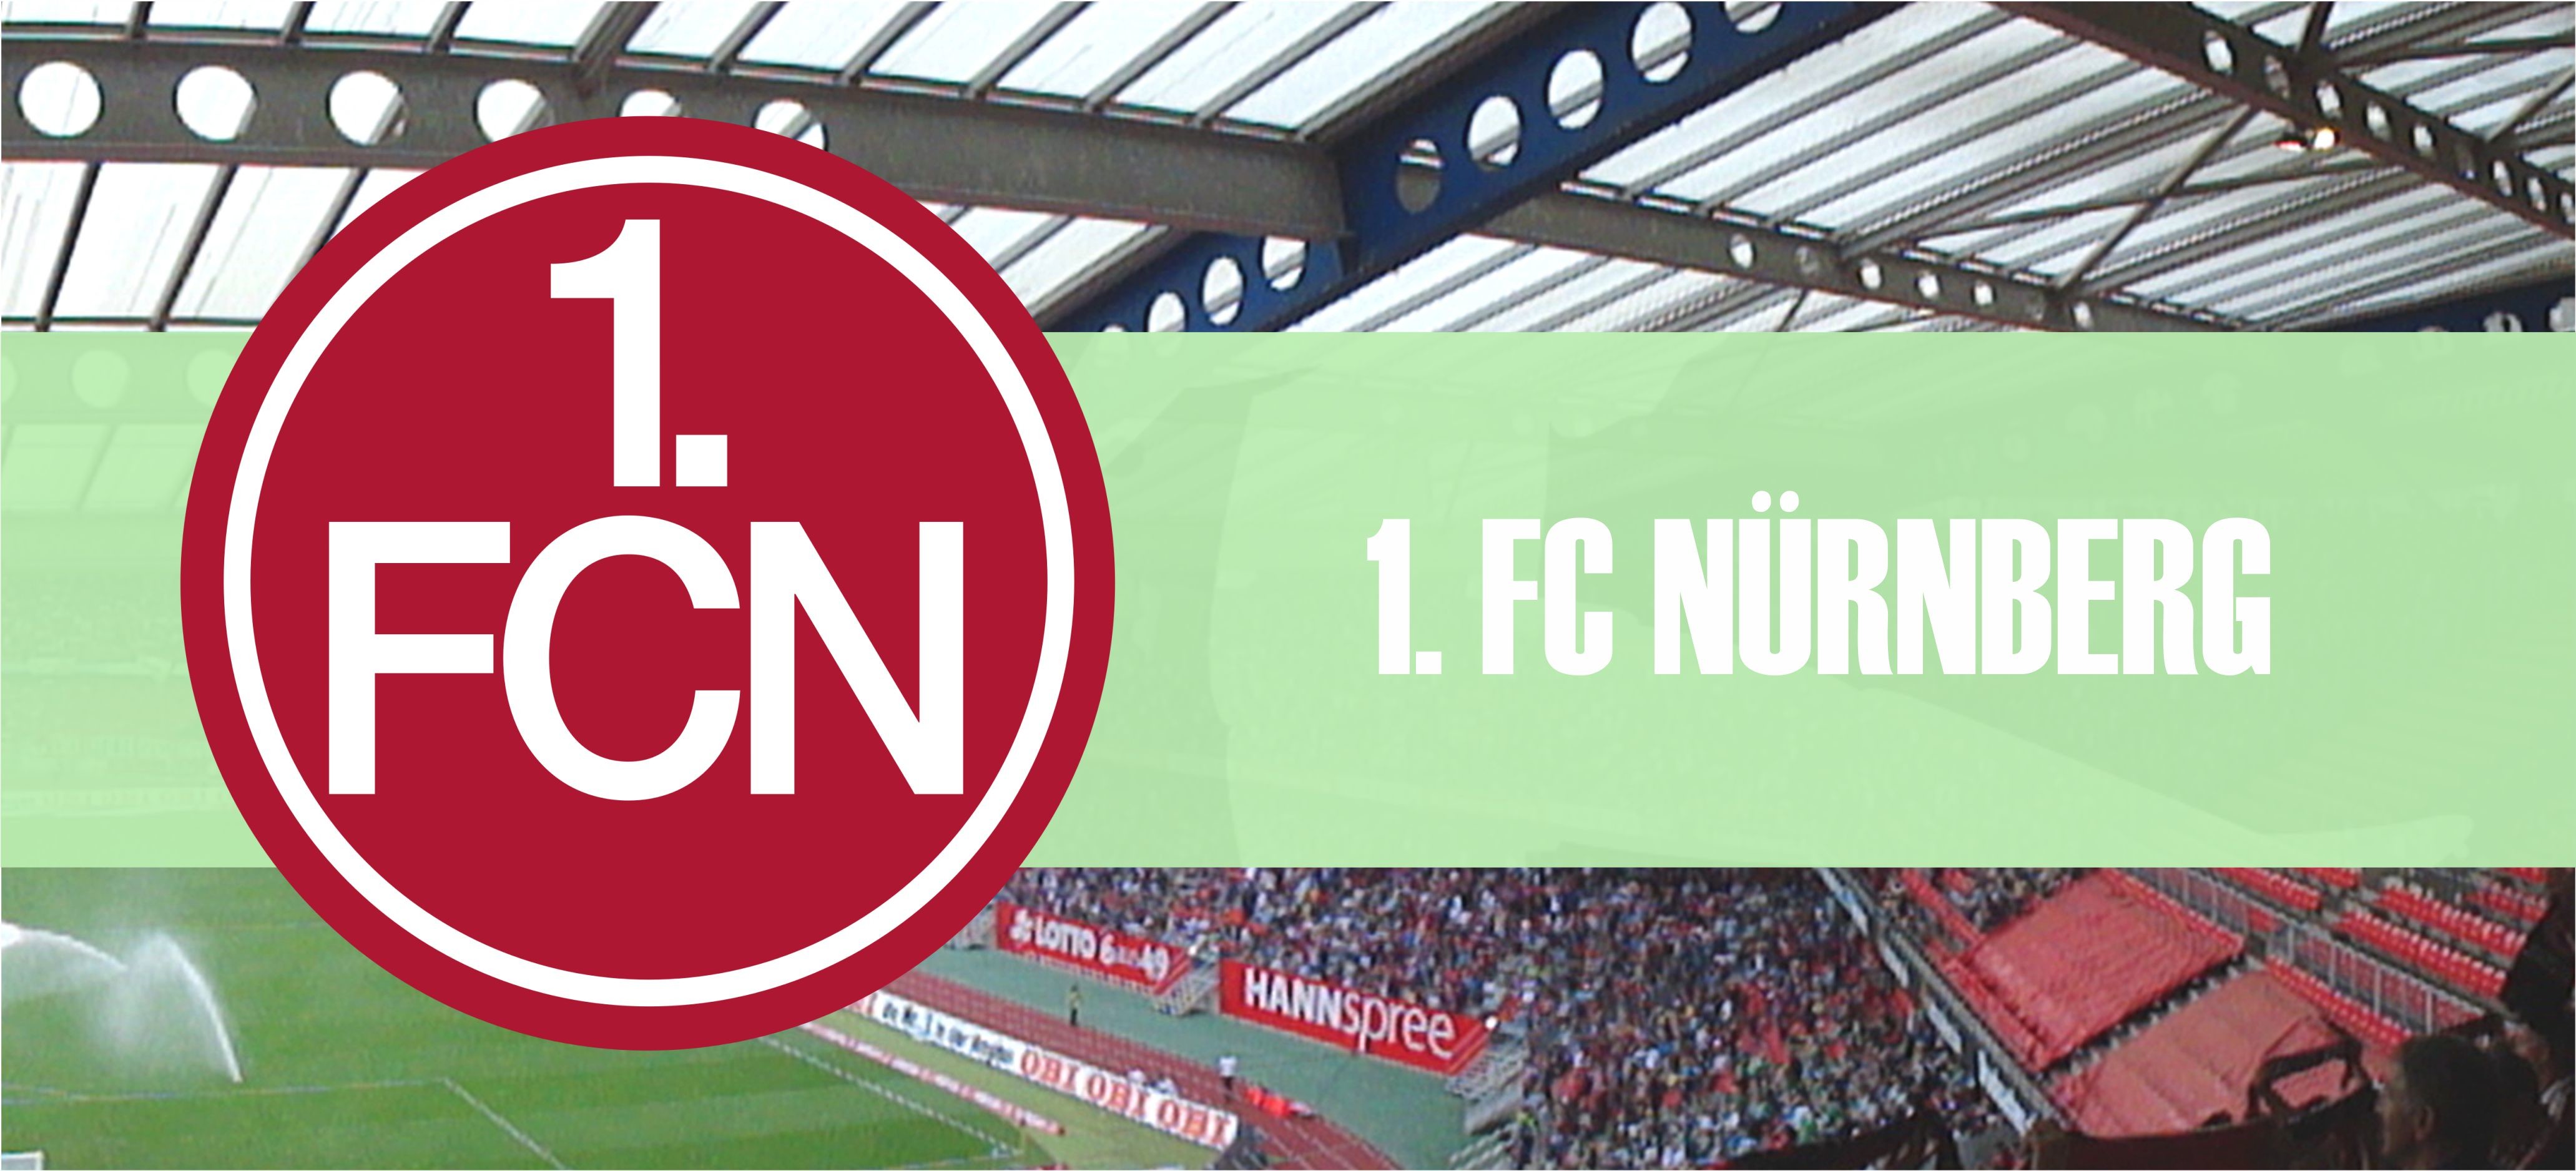 Skarb kibica Bundesligi: 1.FC Nürnberg